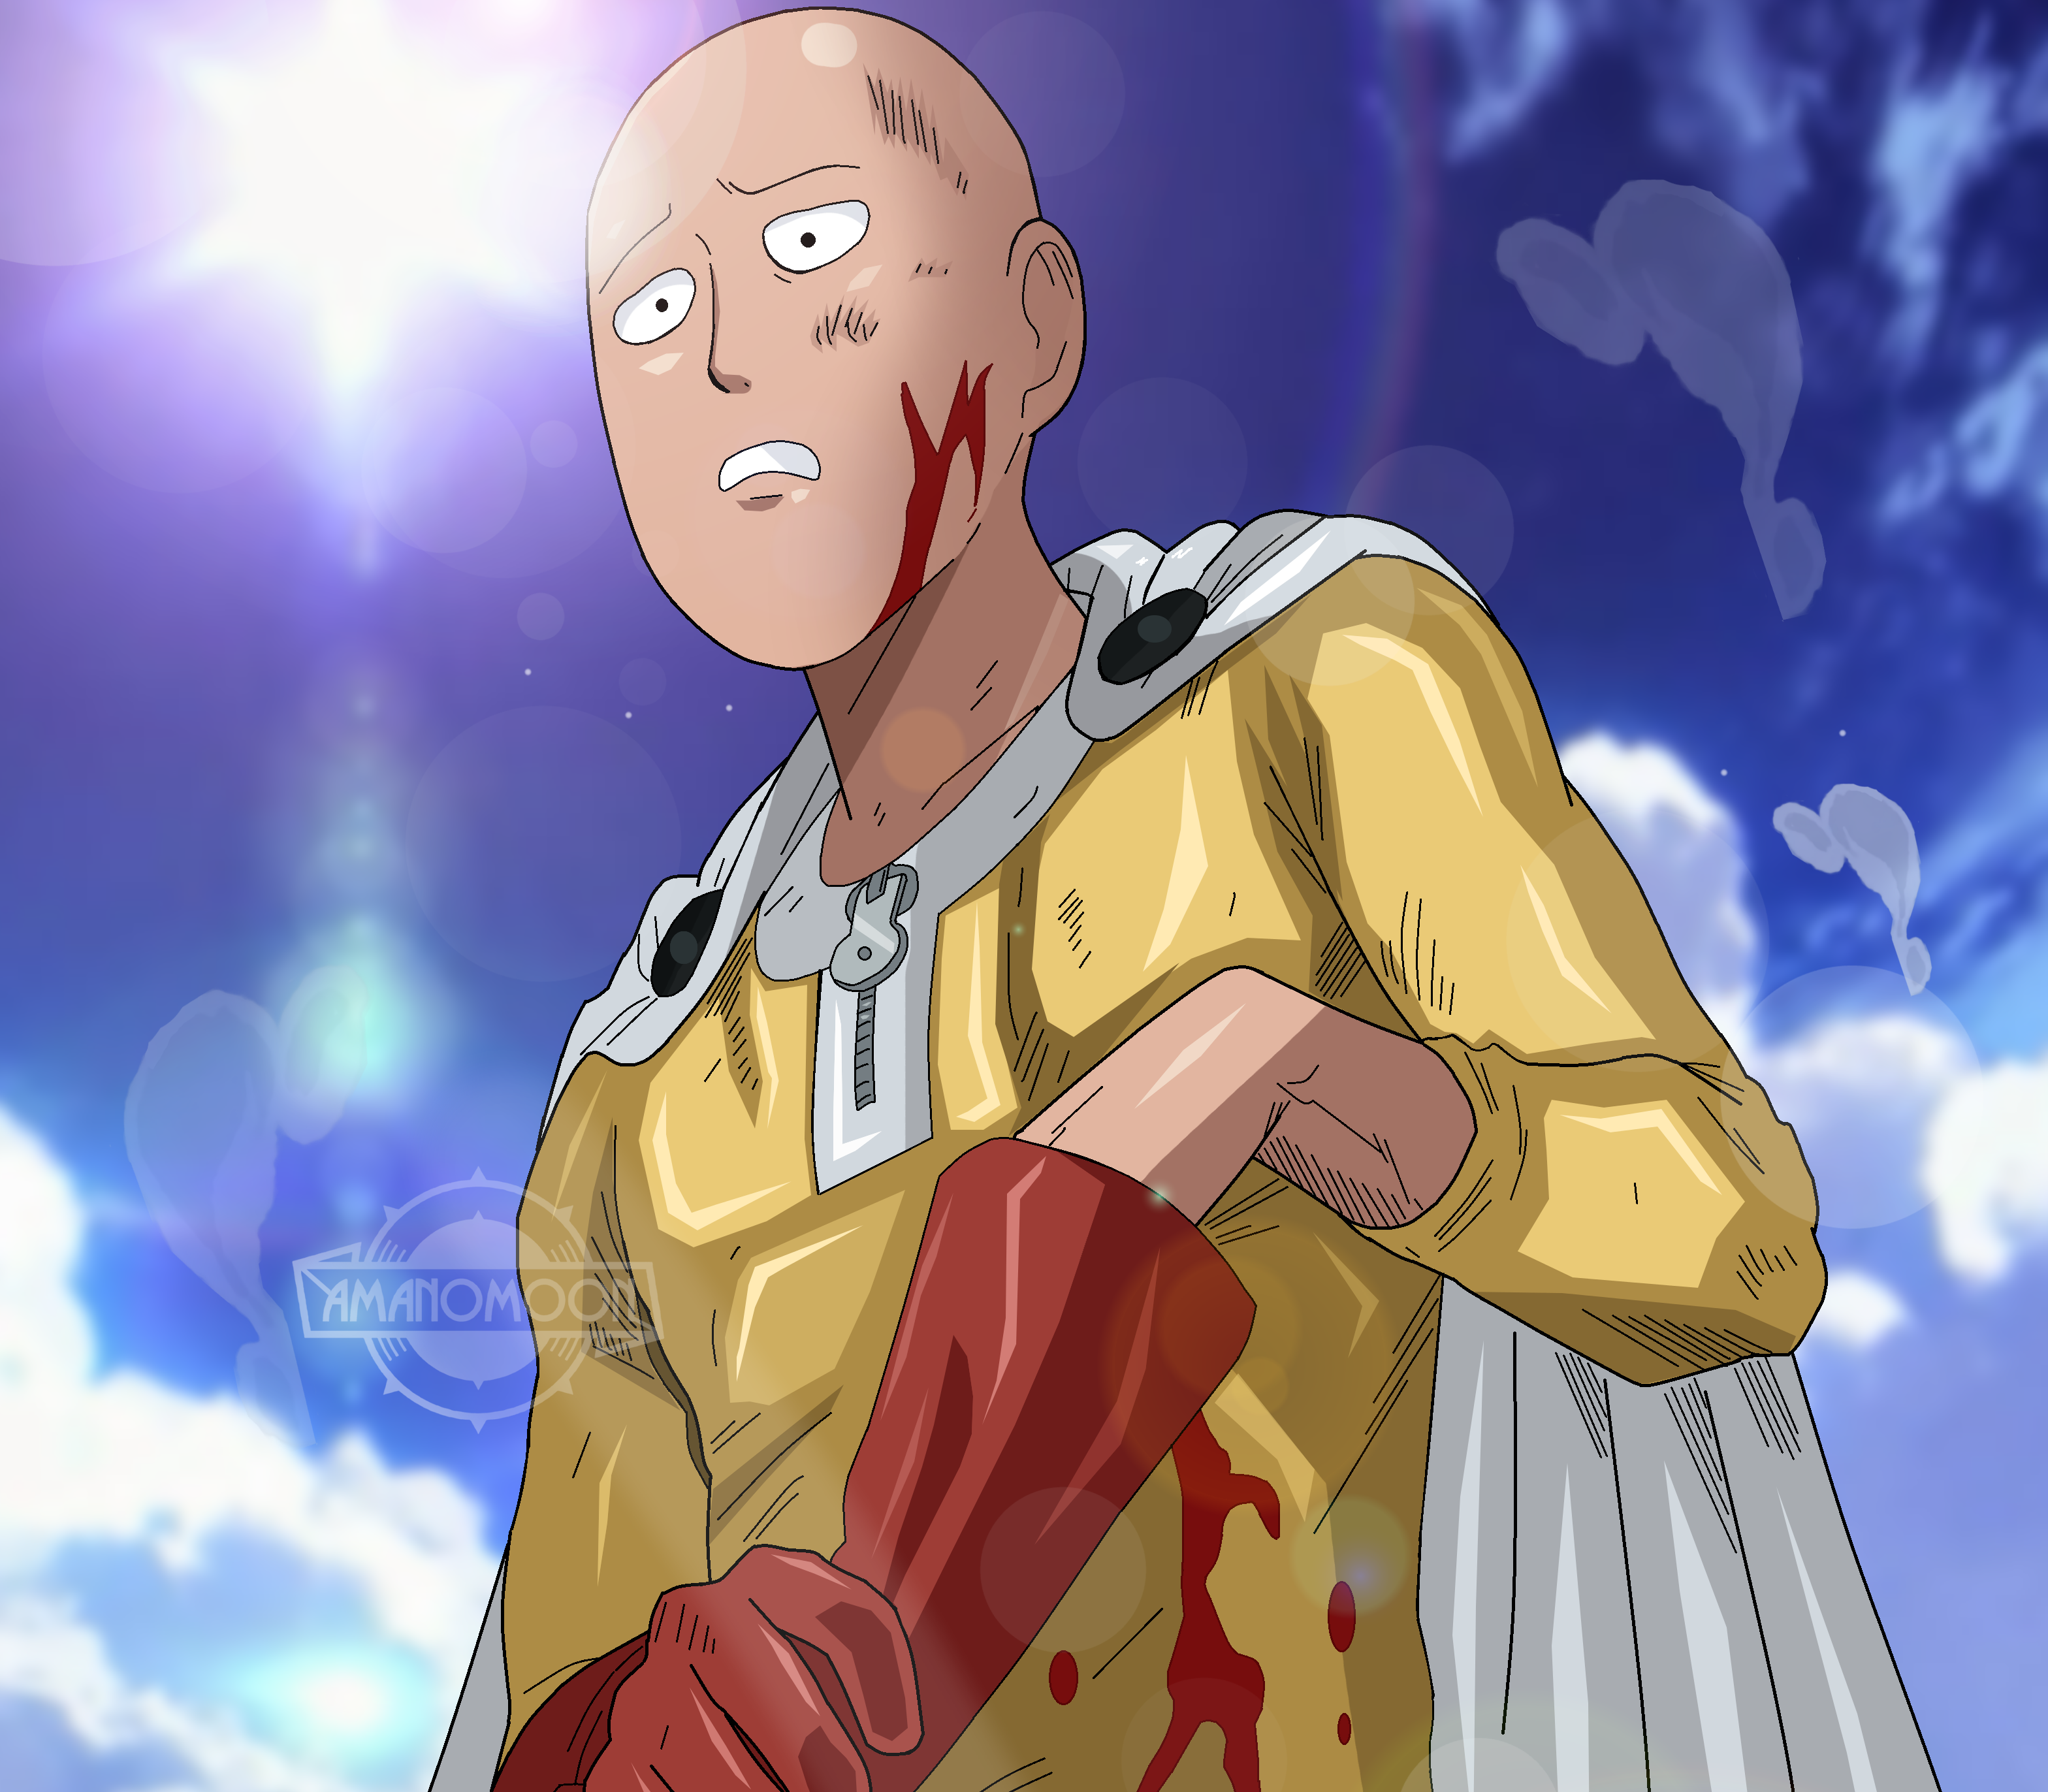 Saitama One Punch Man Anime Wallpaper ID:3216